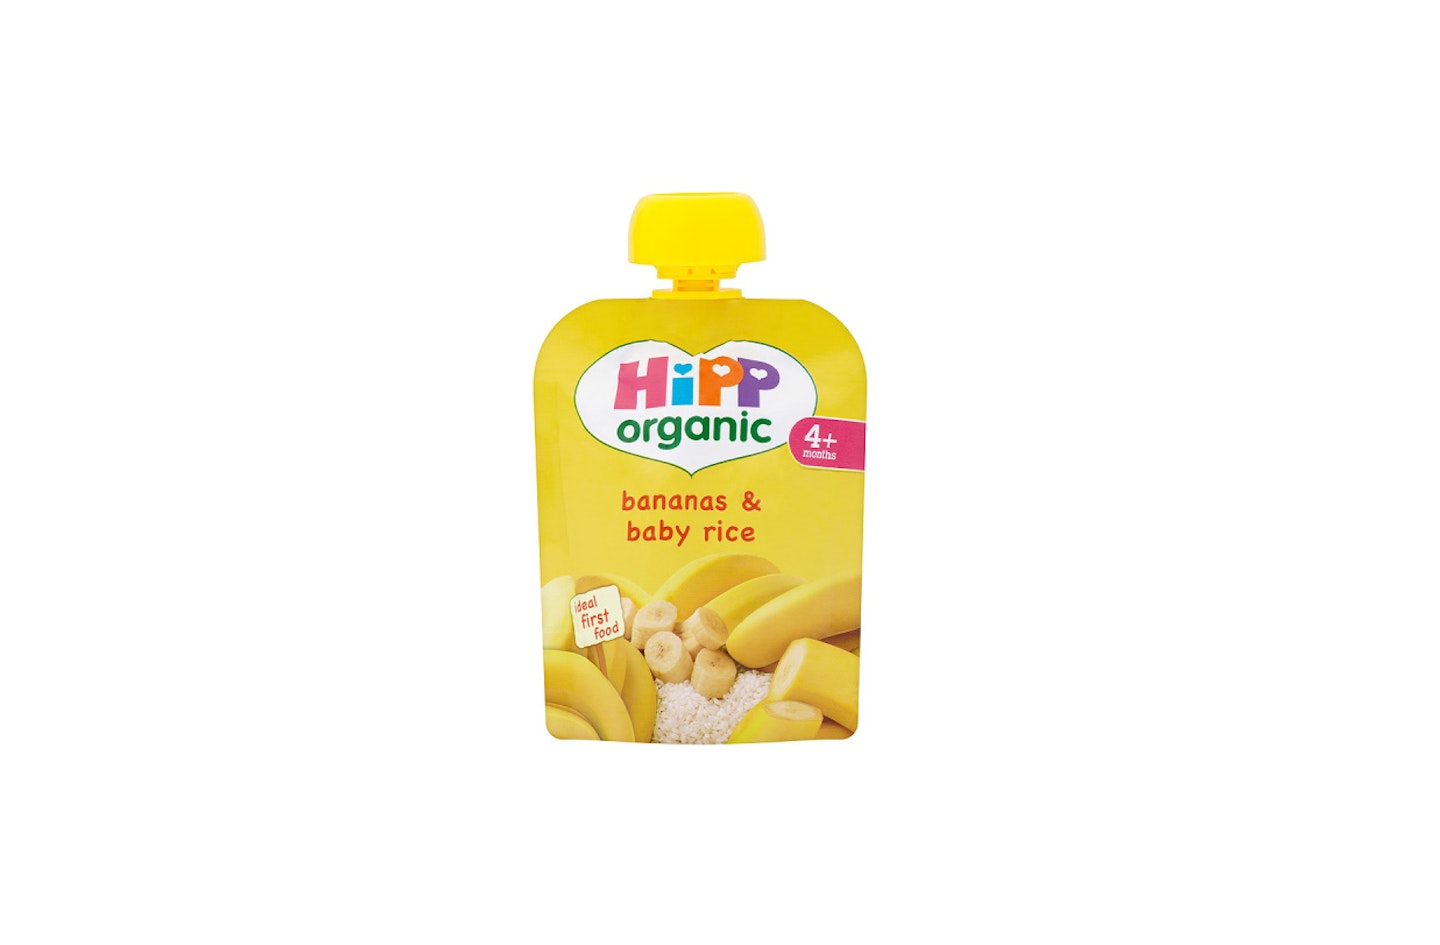 HiPP Bananas u0026 Baby Rice Pouch, £0.45